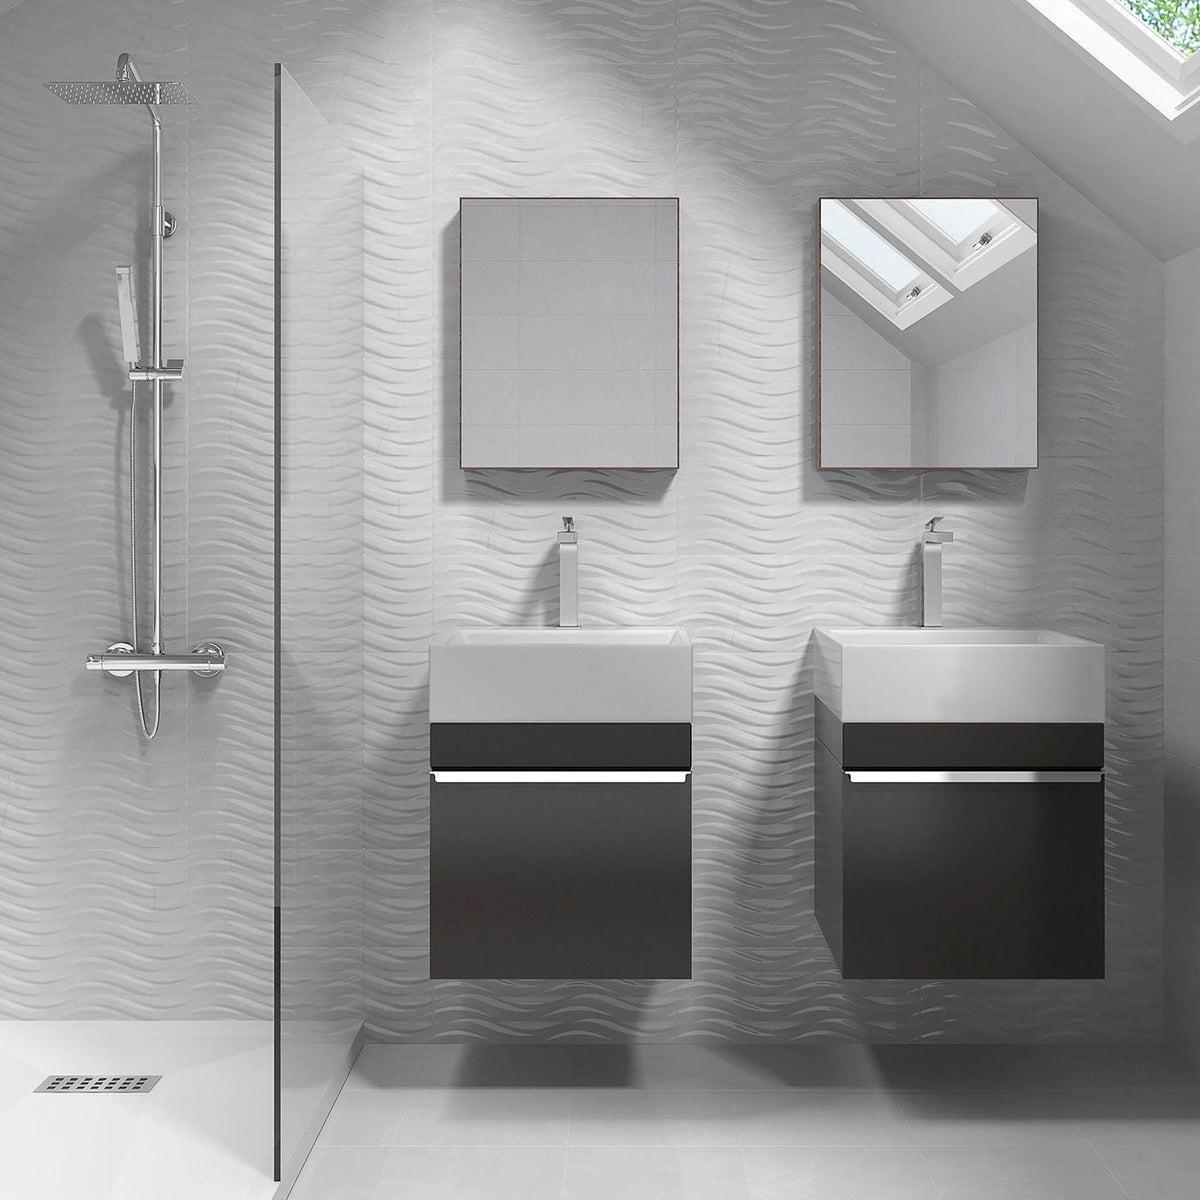 Textured white porcelain bathroom tile wall